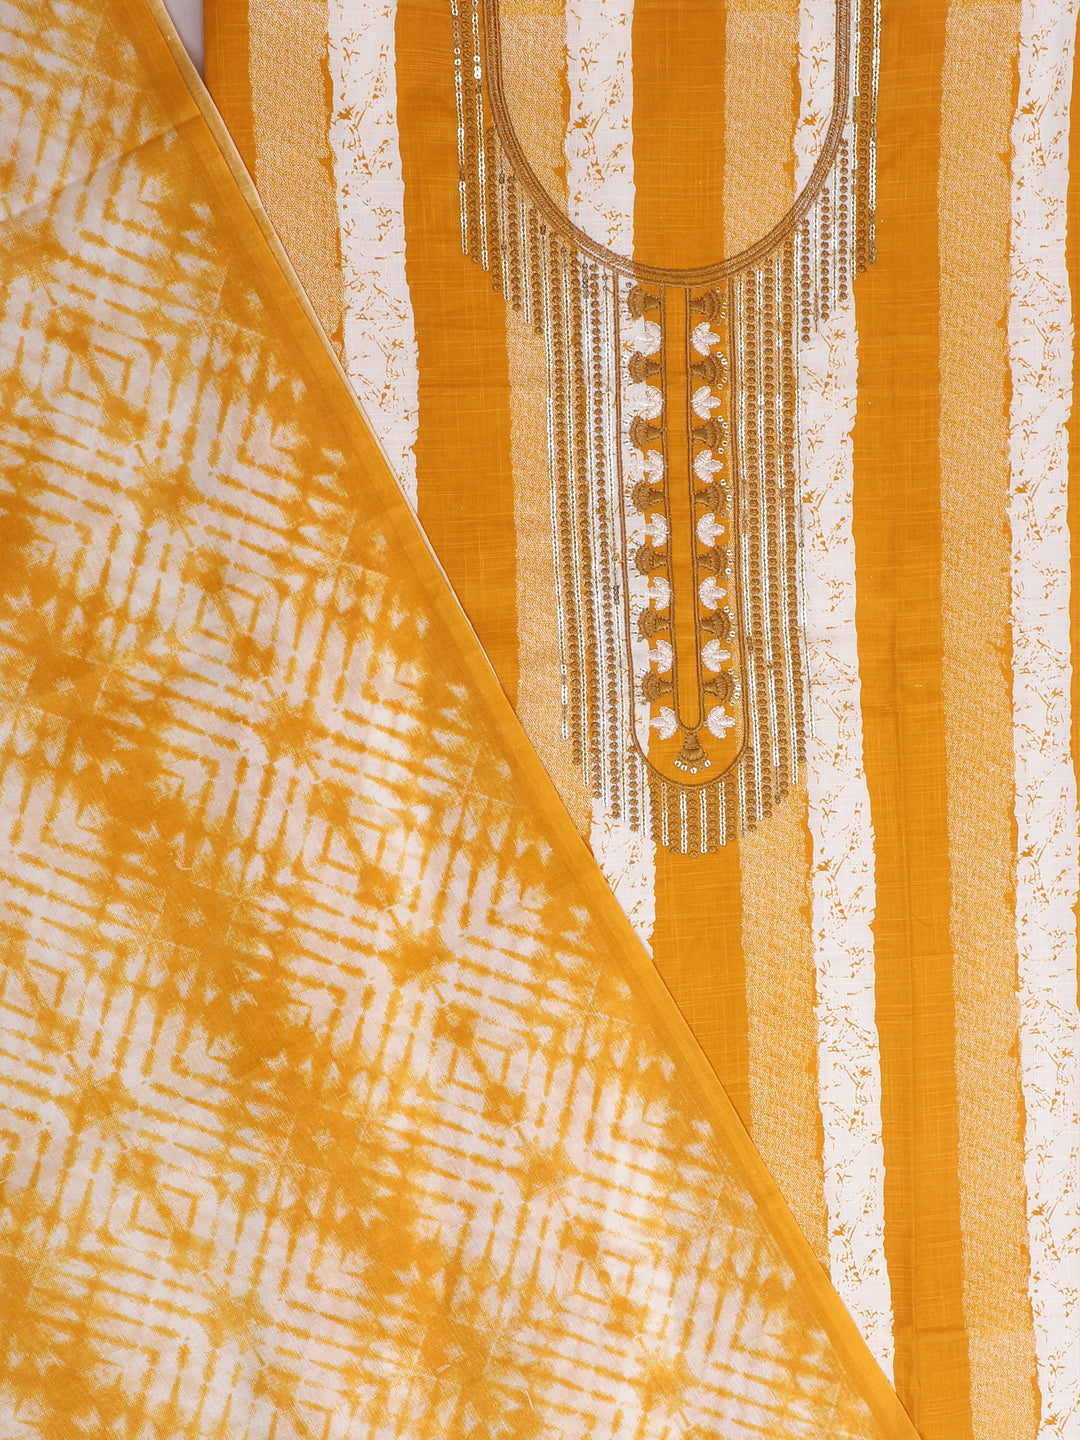 Mustard Yoke Design Unstitch Dress Material with Dupatta